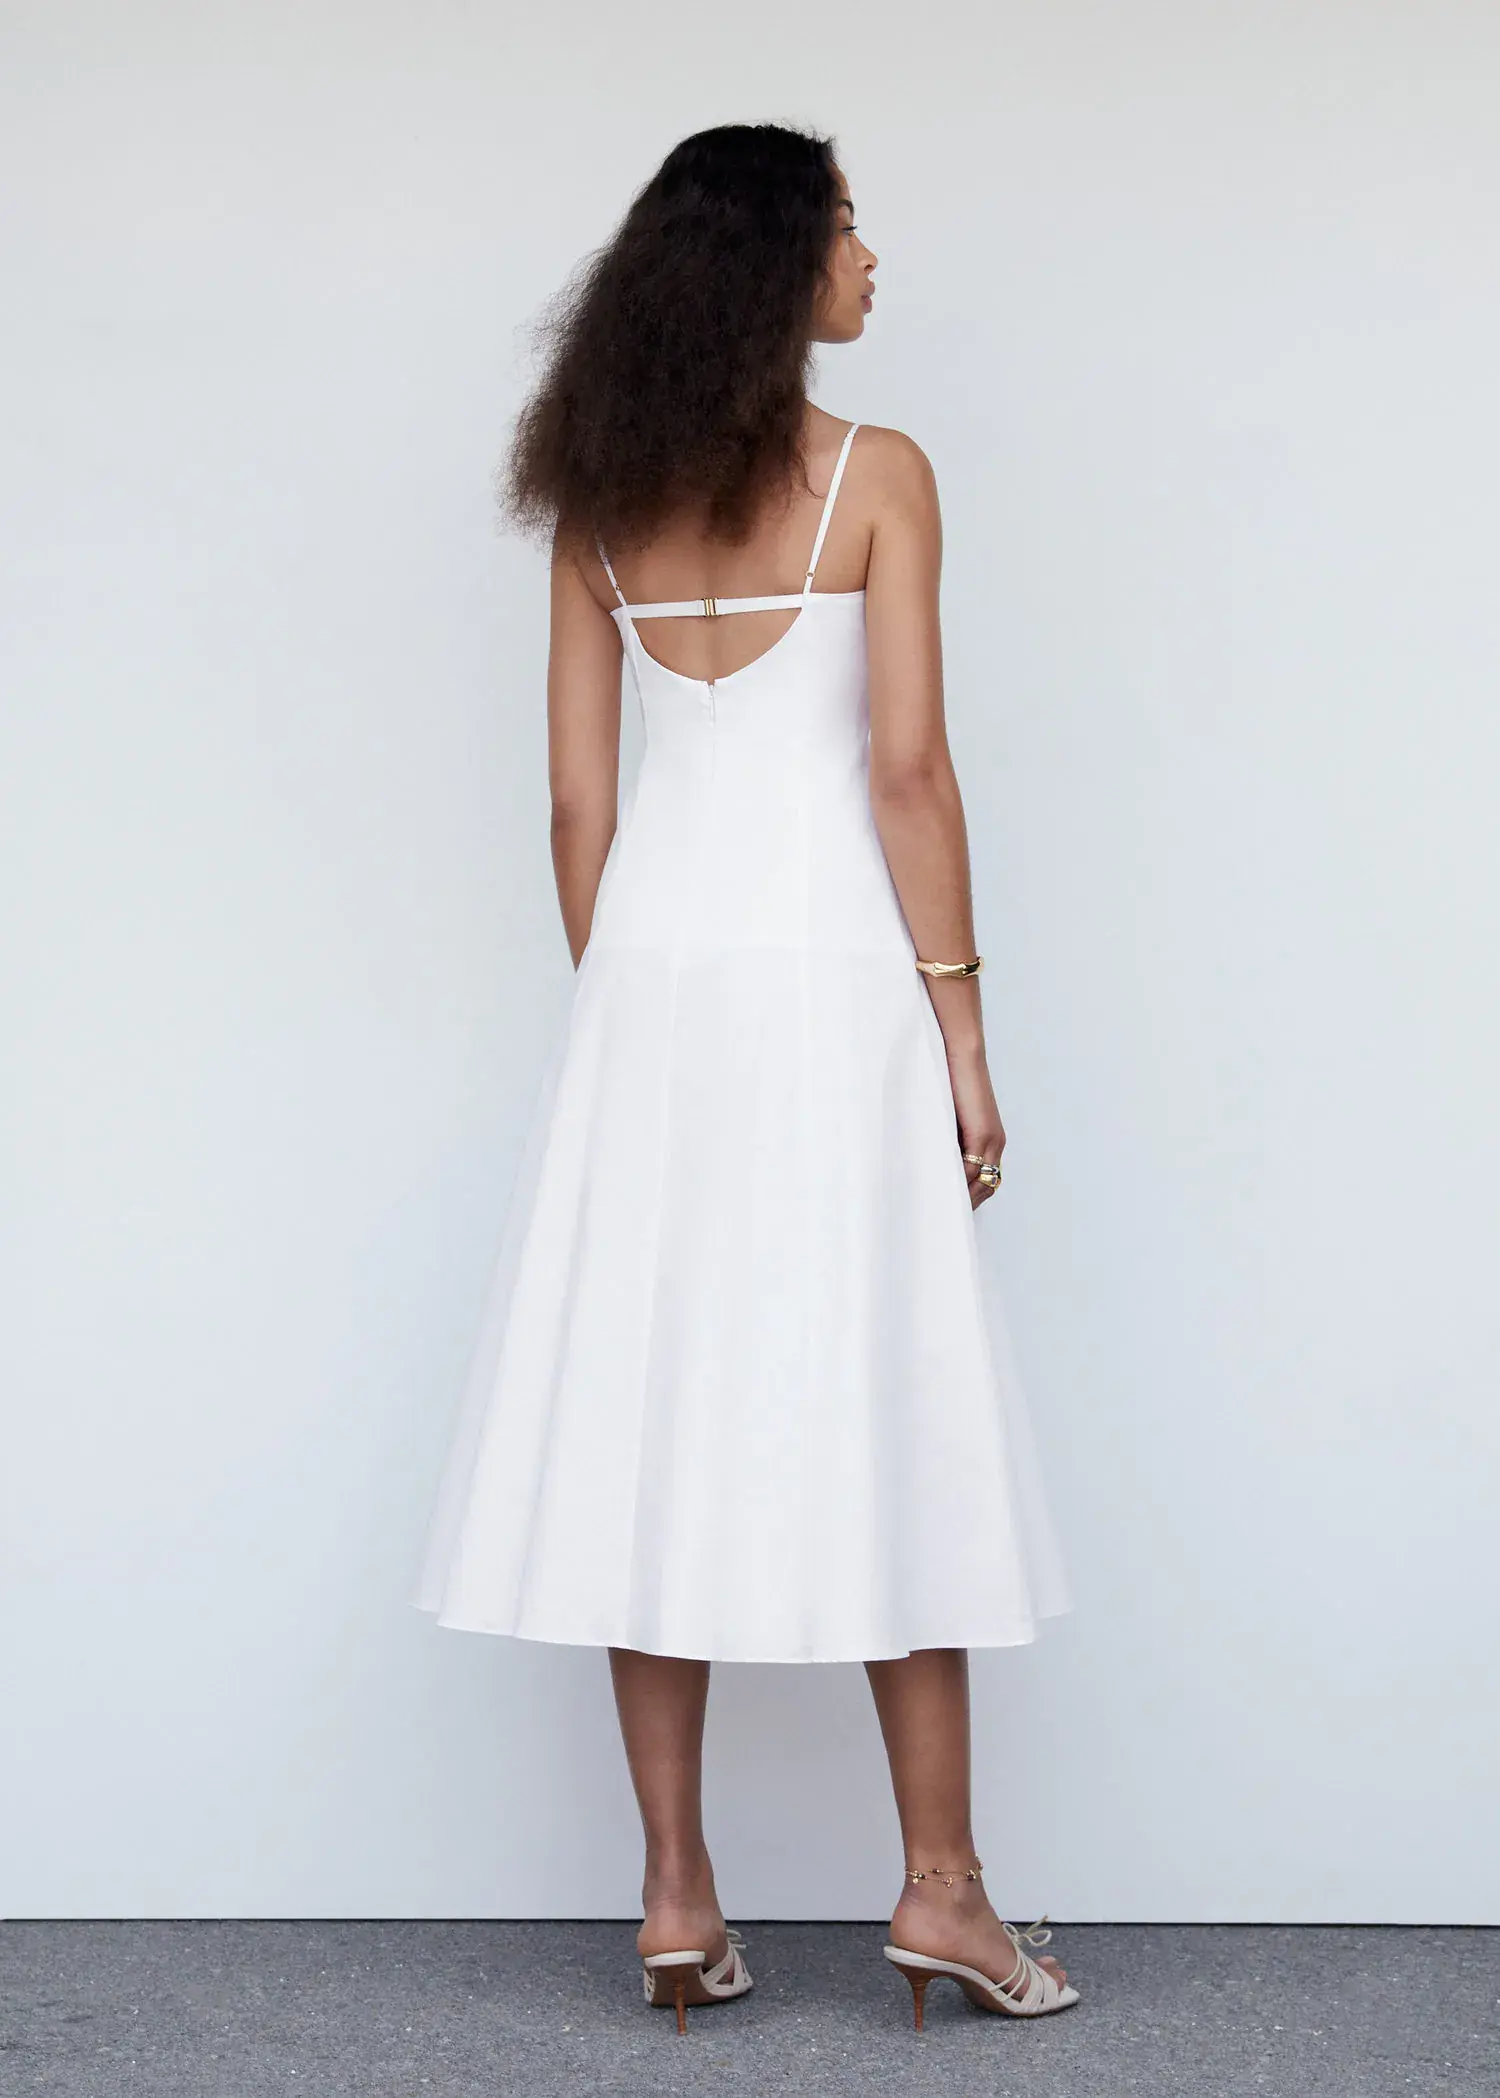 Mango Midi-dress with back detail. a woman wearing a white dress standing next to a white wall. 